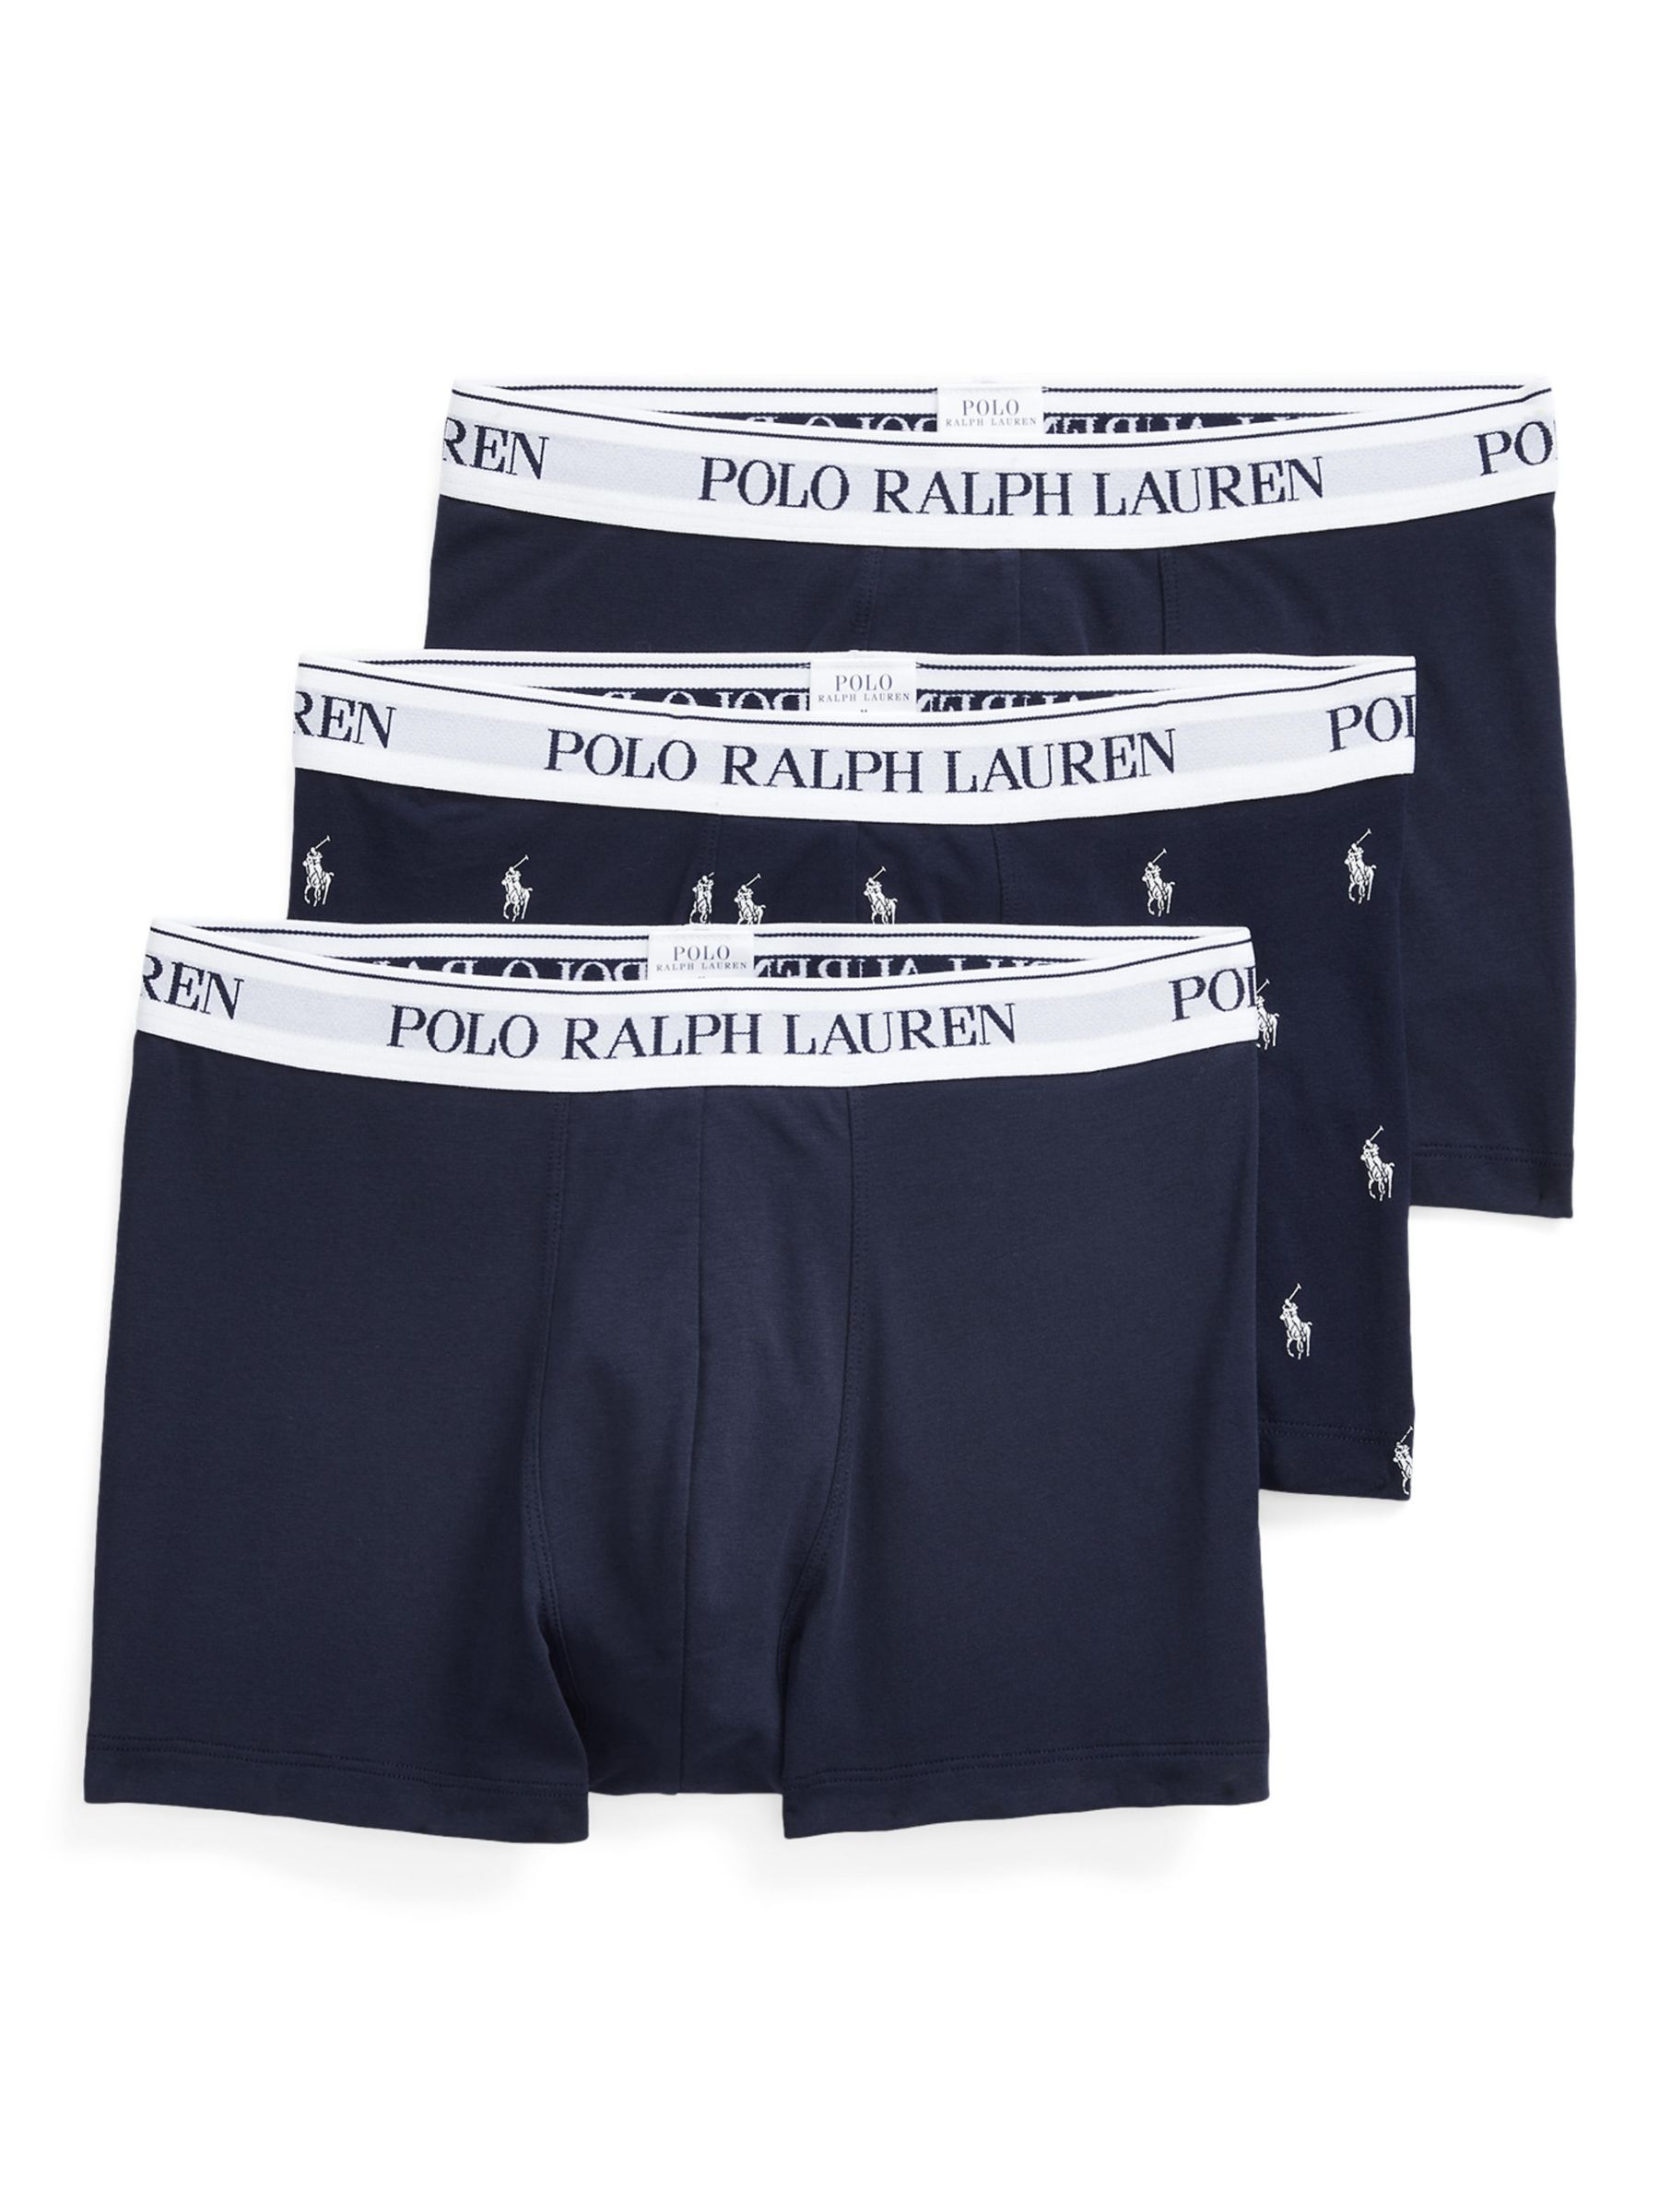 Polo Ralph Lauren Stretch Cotton Trunks, Pack of 3, Navy Print at John ...